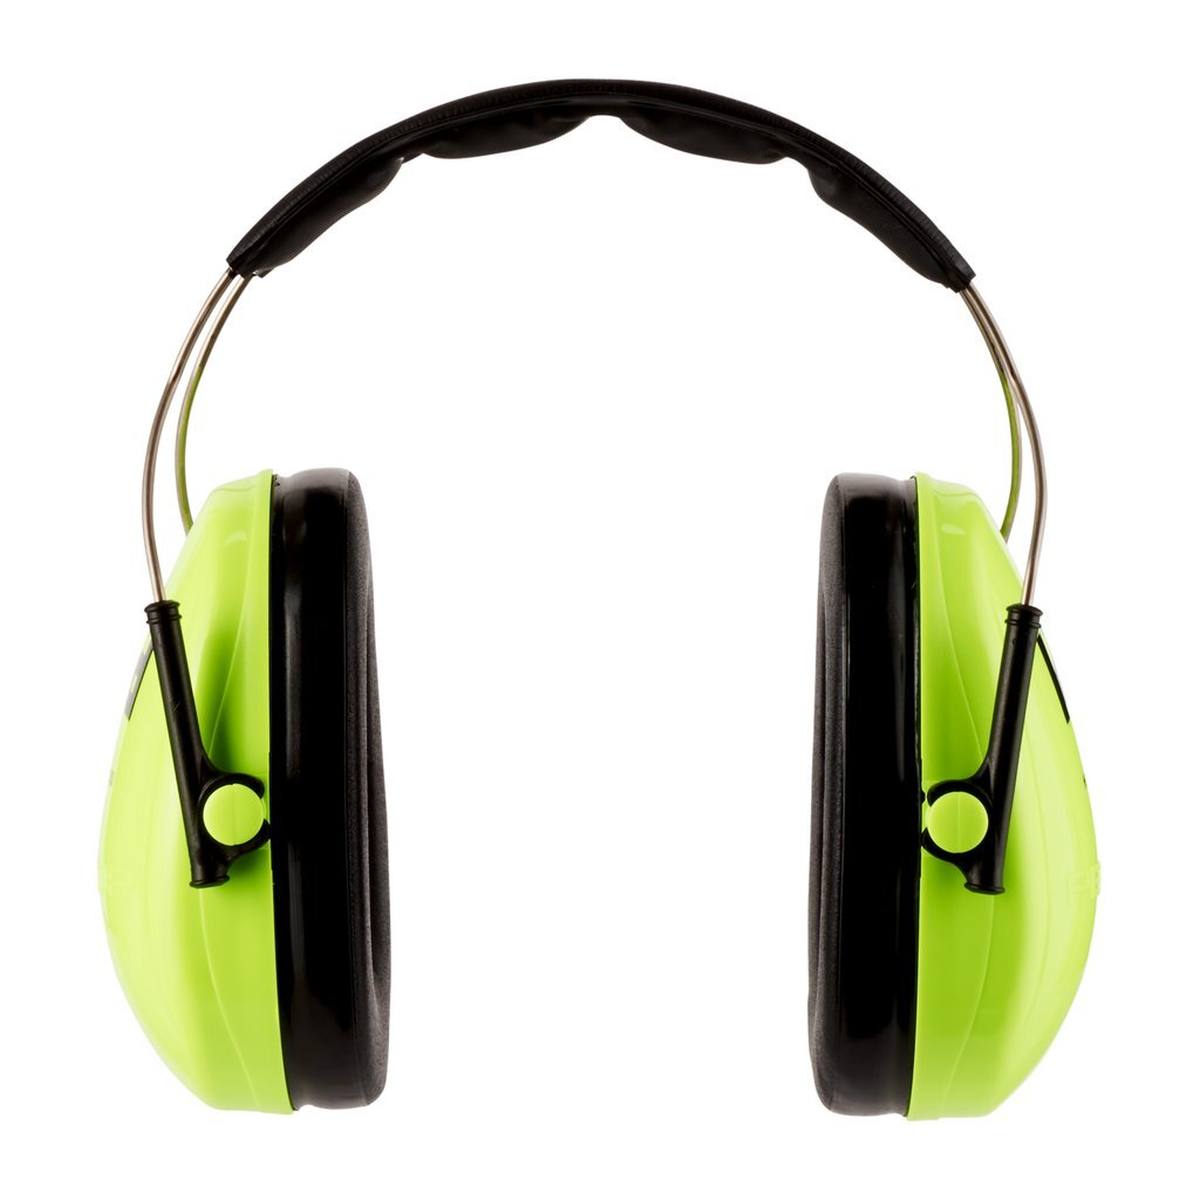 3M Peltor Kapselgehörschutz für Kinder H510AK, Neongrün (87 bis 98 dB)